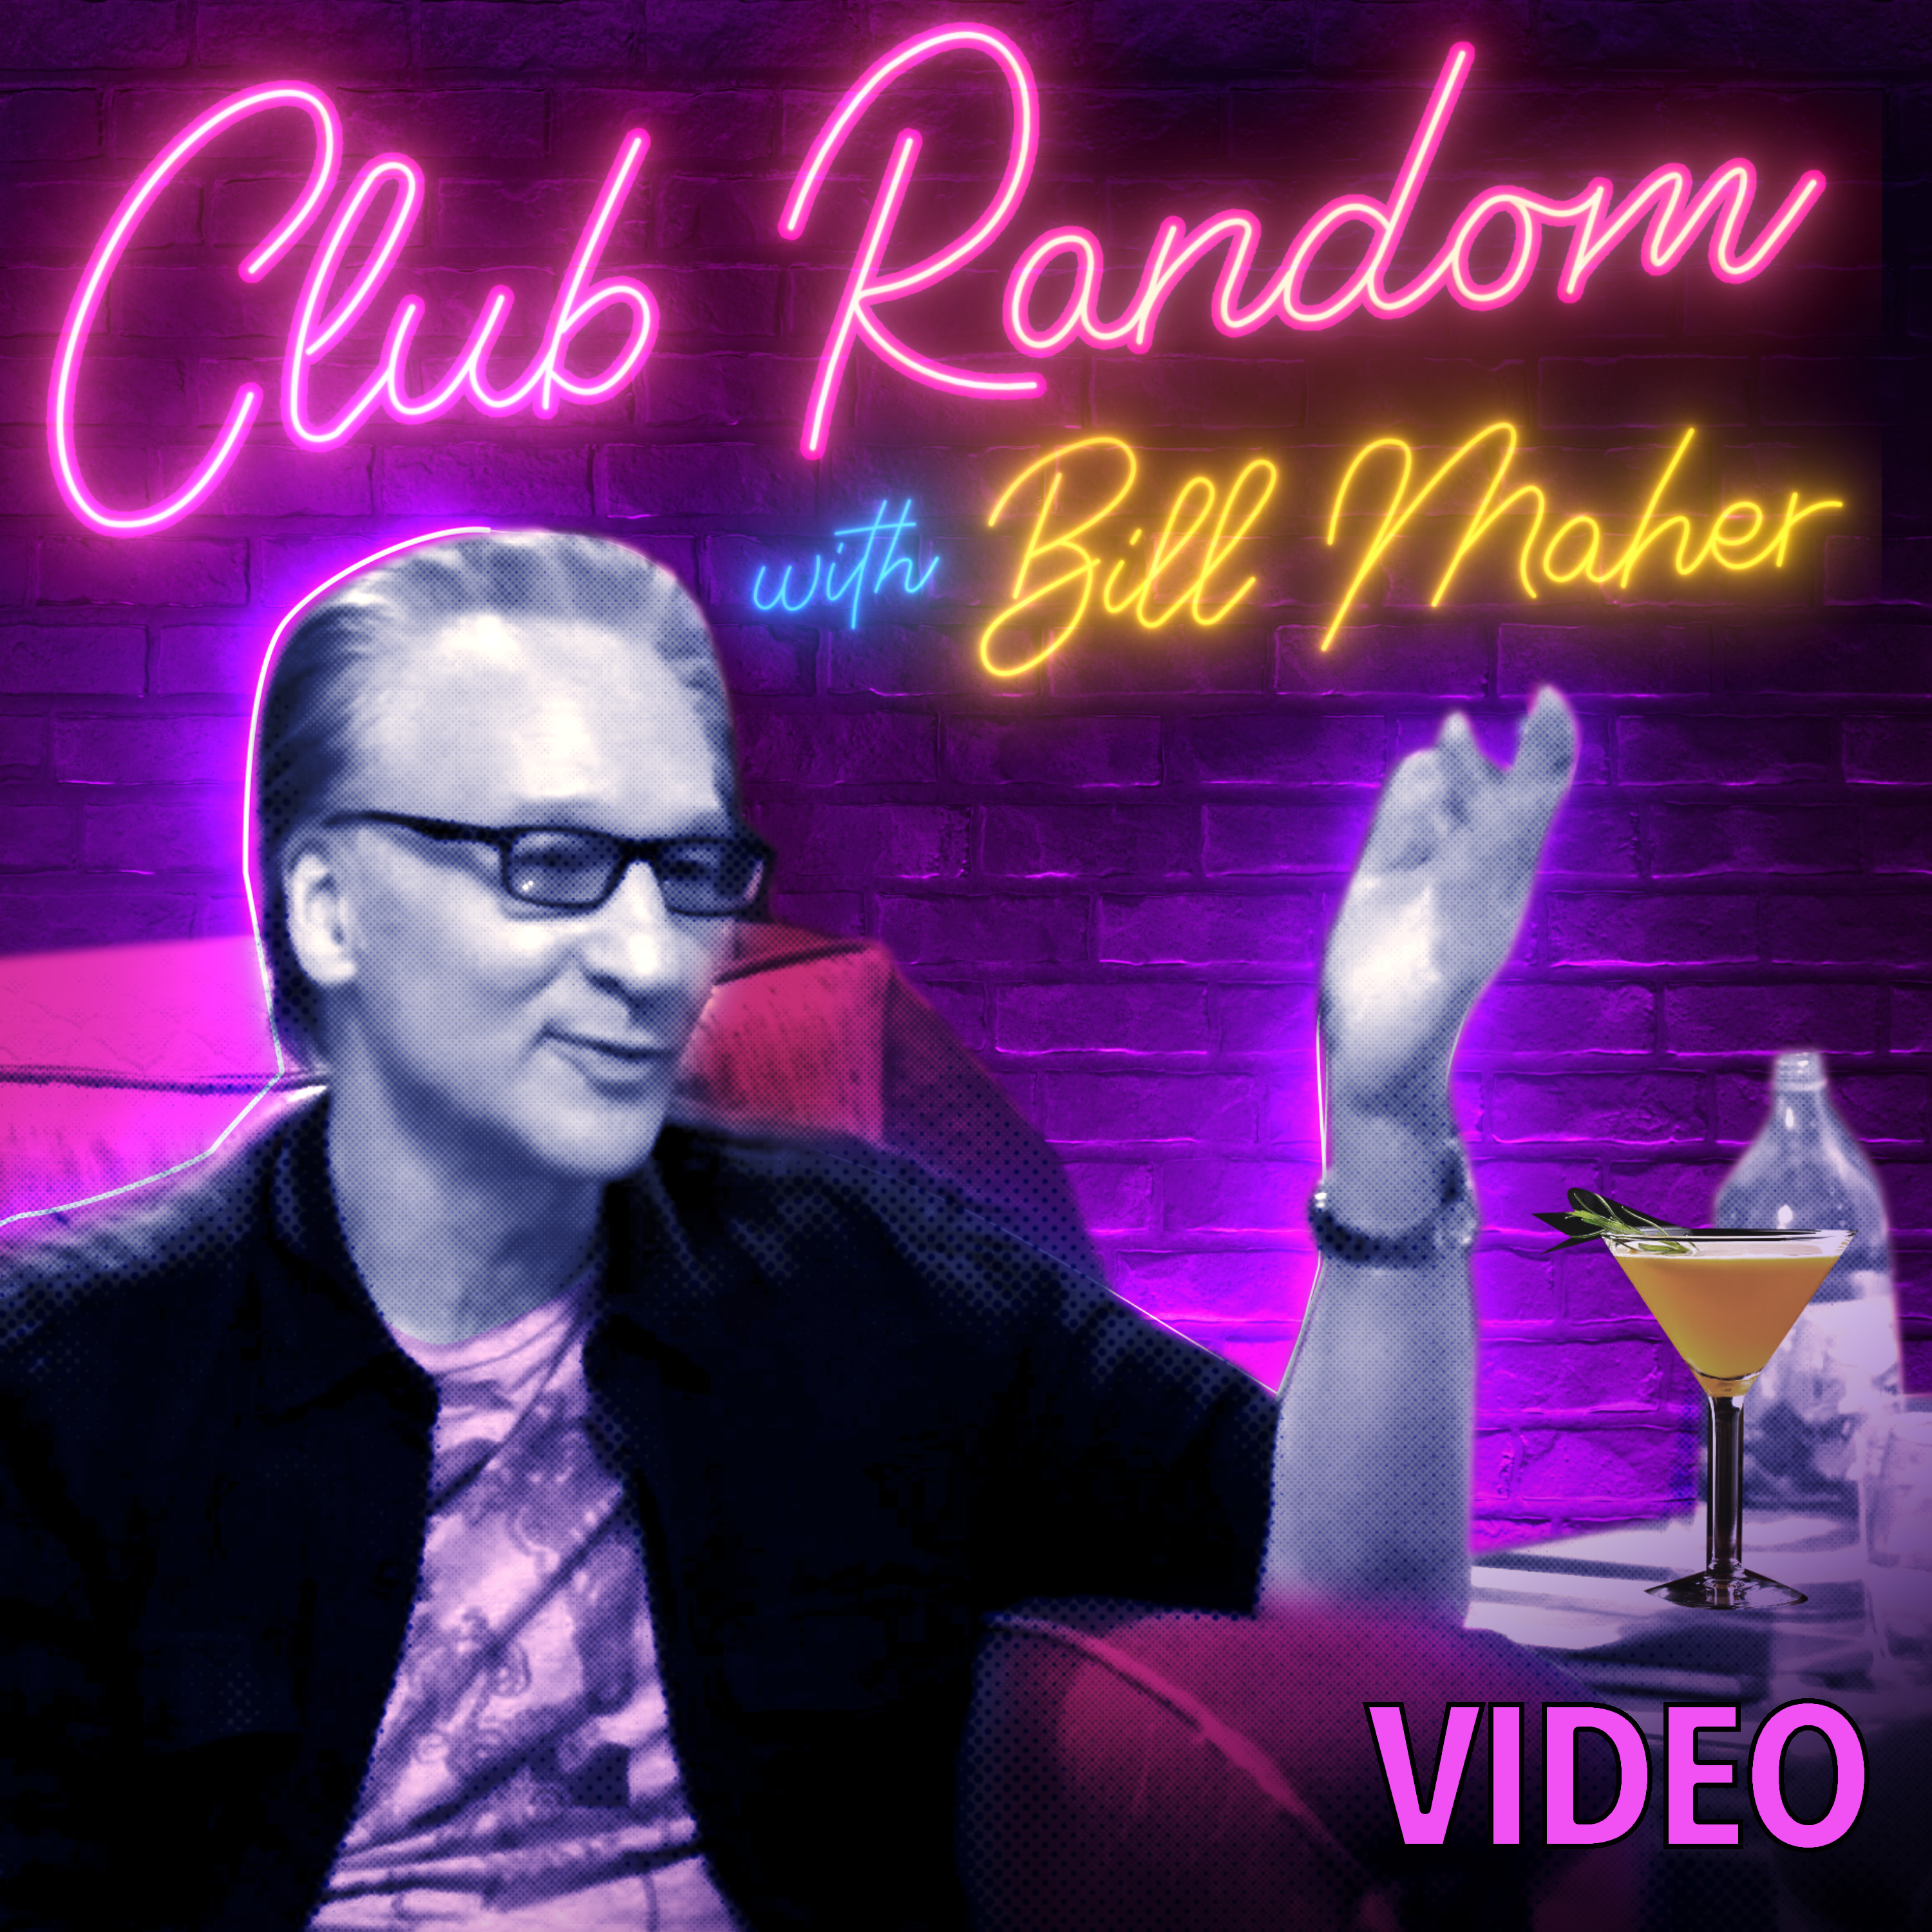 Video Rachel Bilson Club Random With Bill Maher Video Club Random With Bill Maher